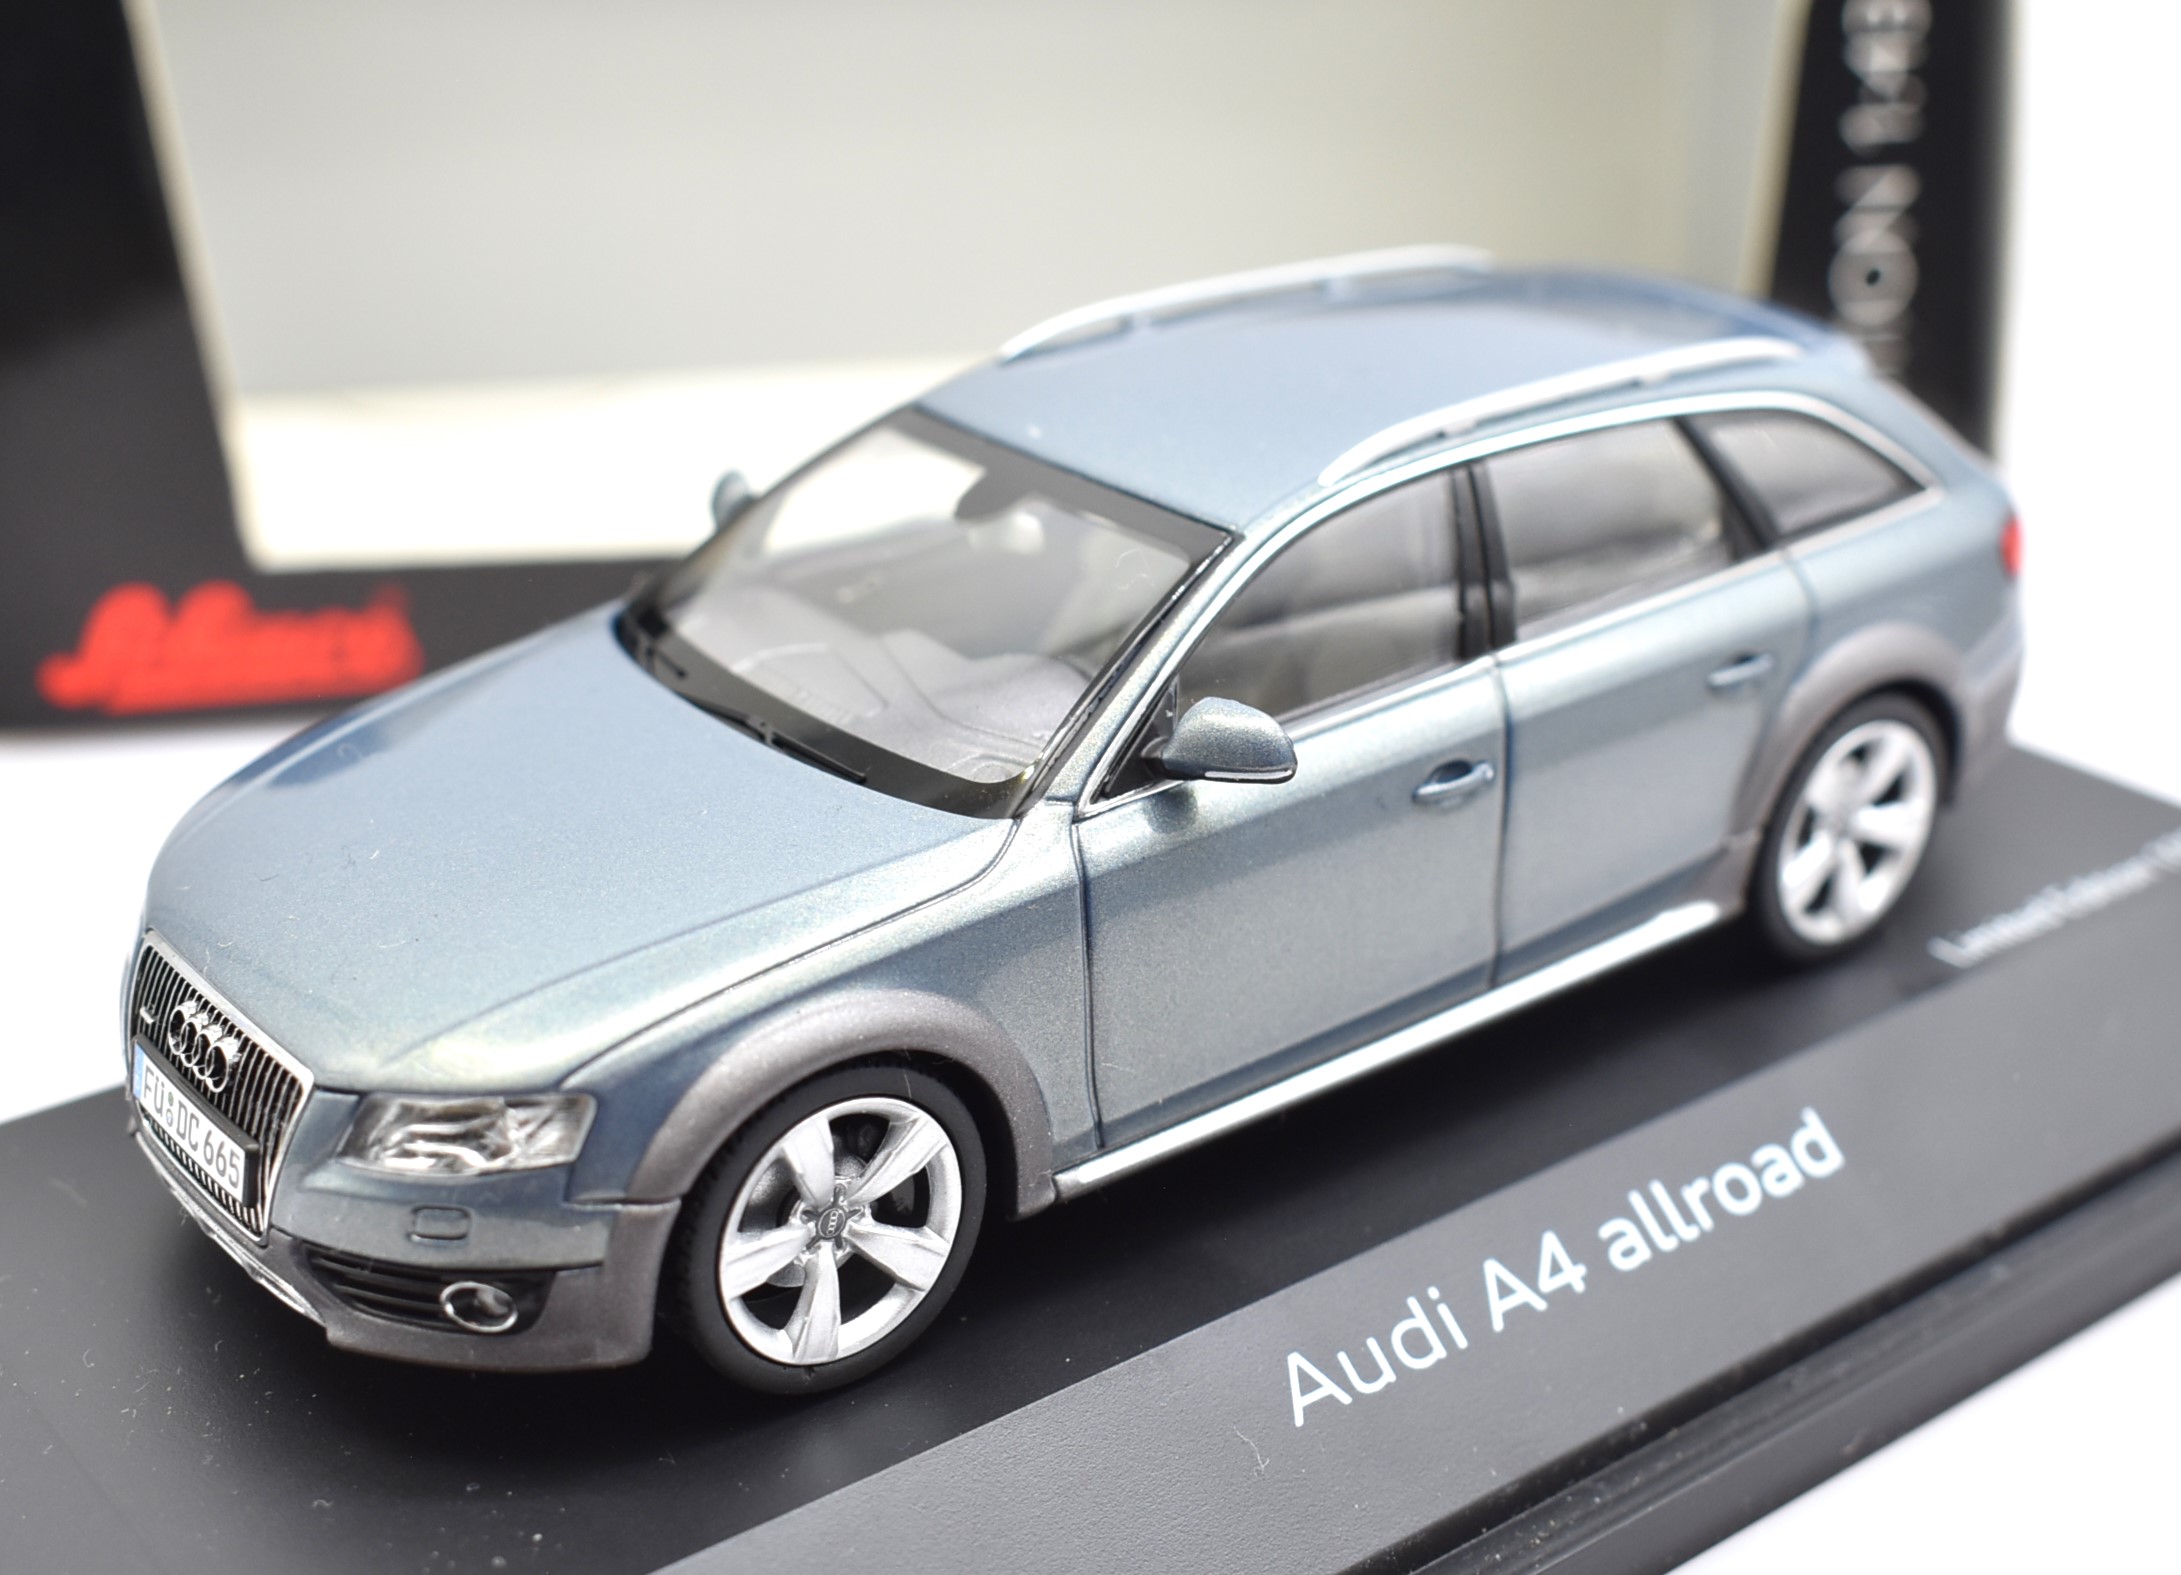 modellauto Auto Maßstab 1:43, Audi A4 Allroad, Schuco diecastmodellbausammlung